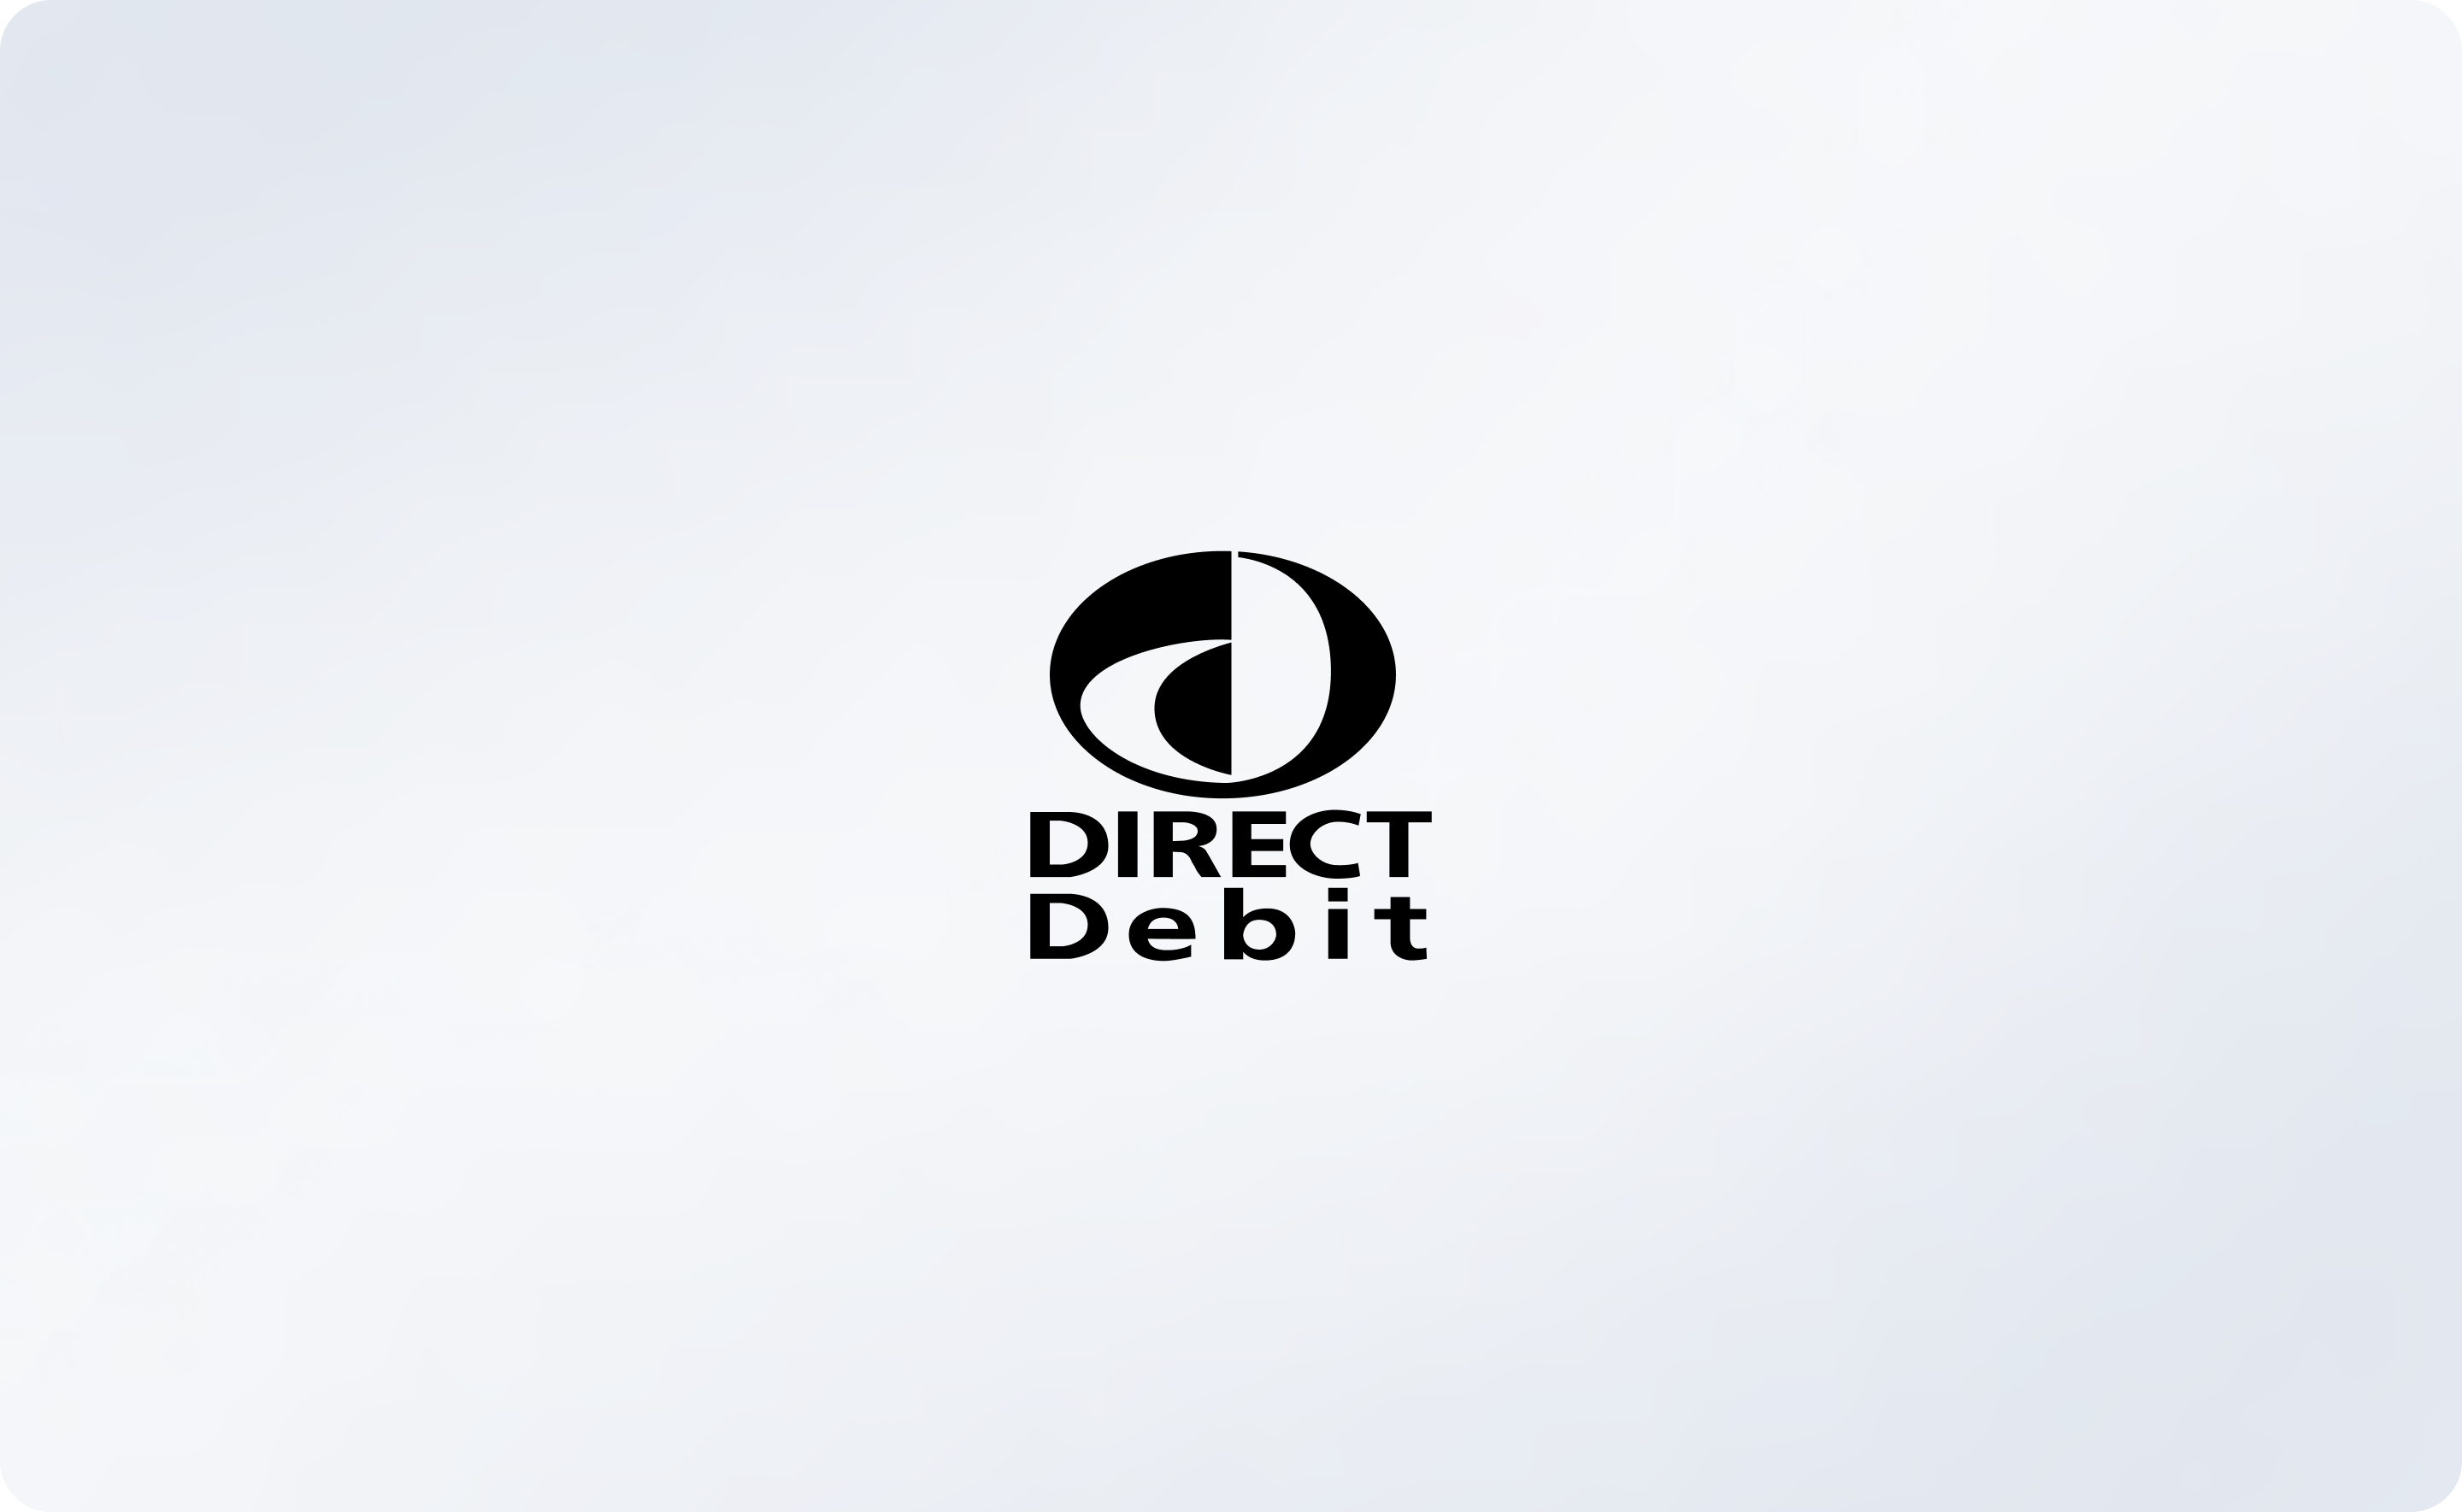 Direct Debits